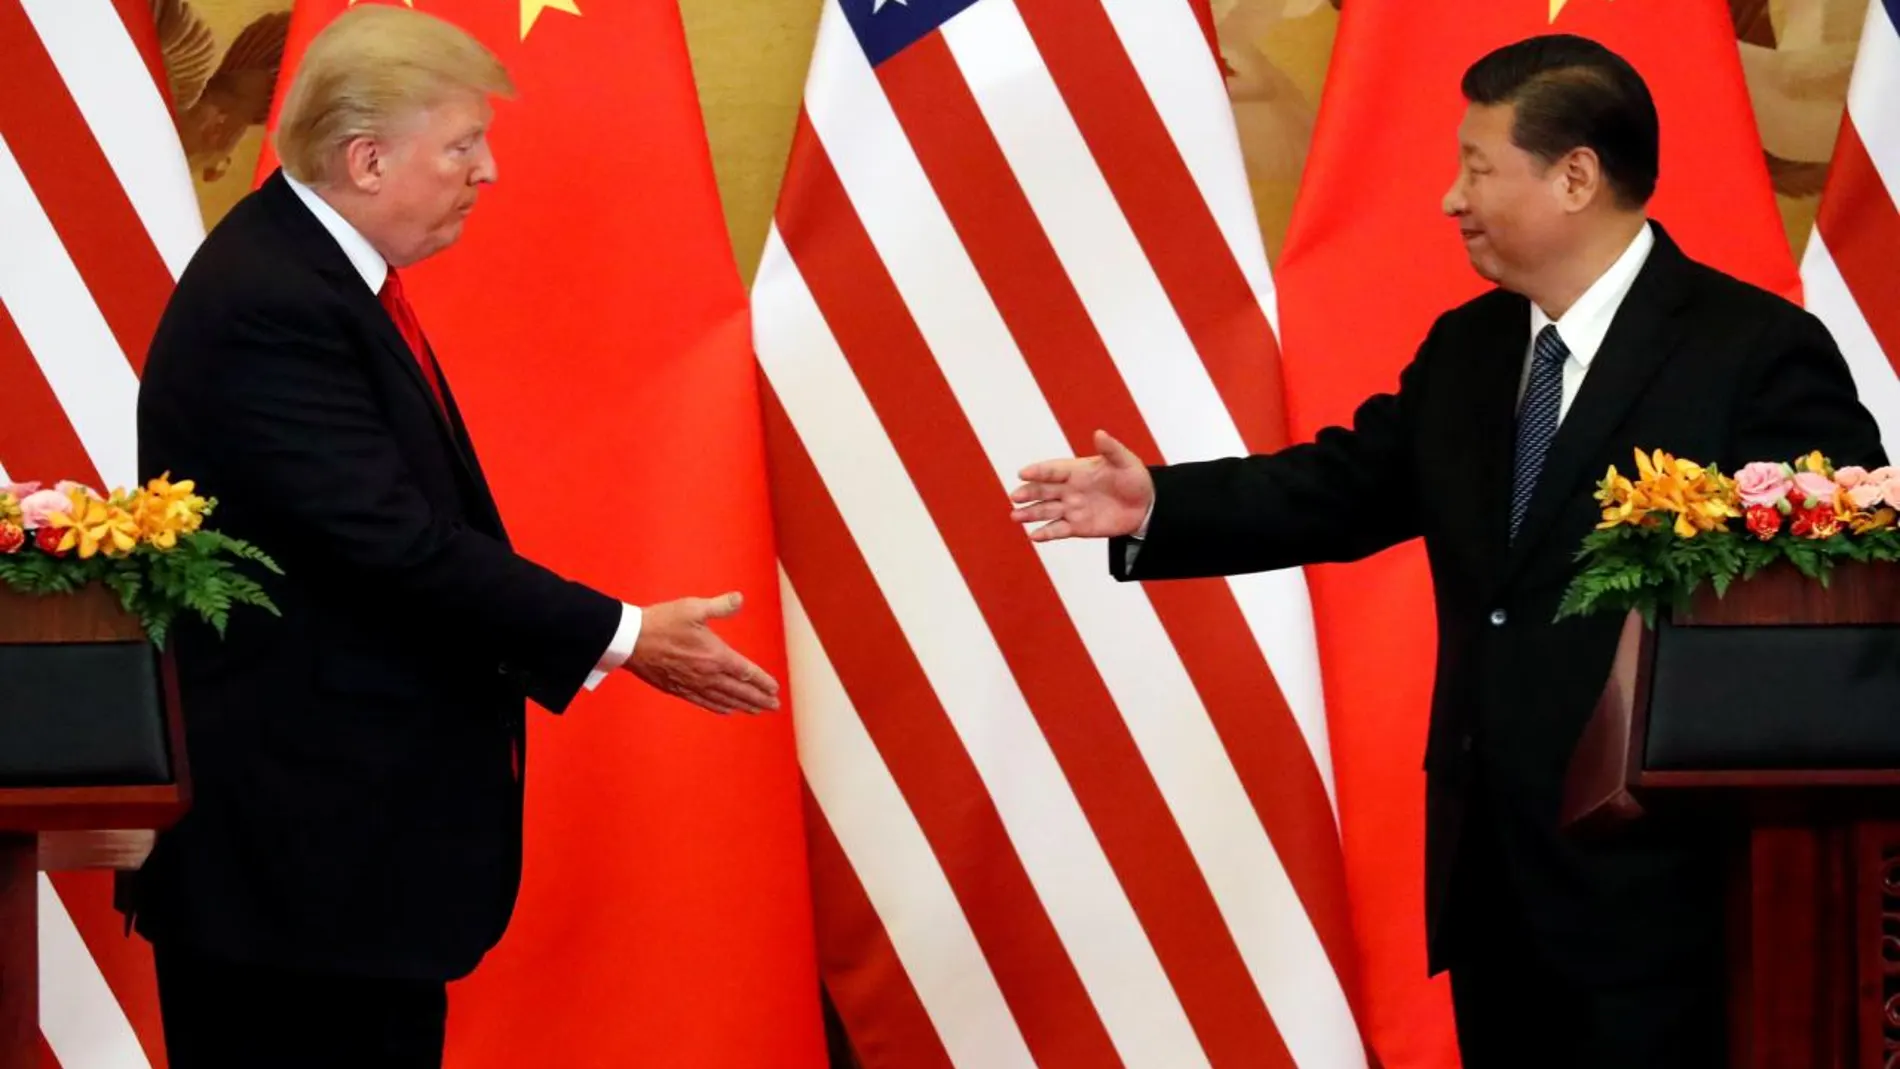 Donald Trump y Xi Jinping, en una imagen de archivo / Reuters